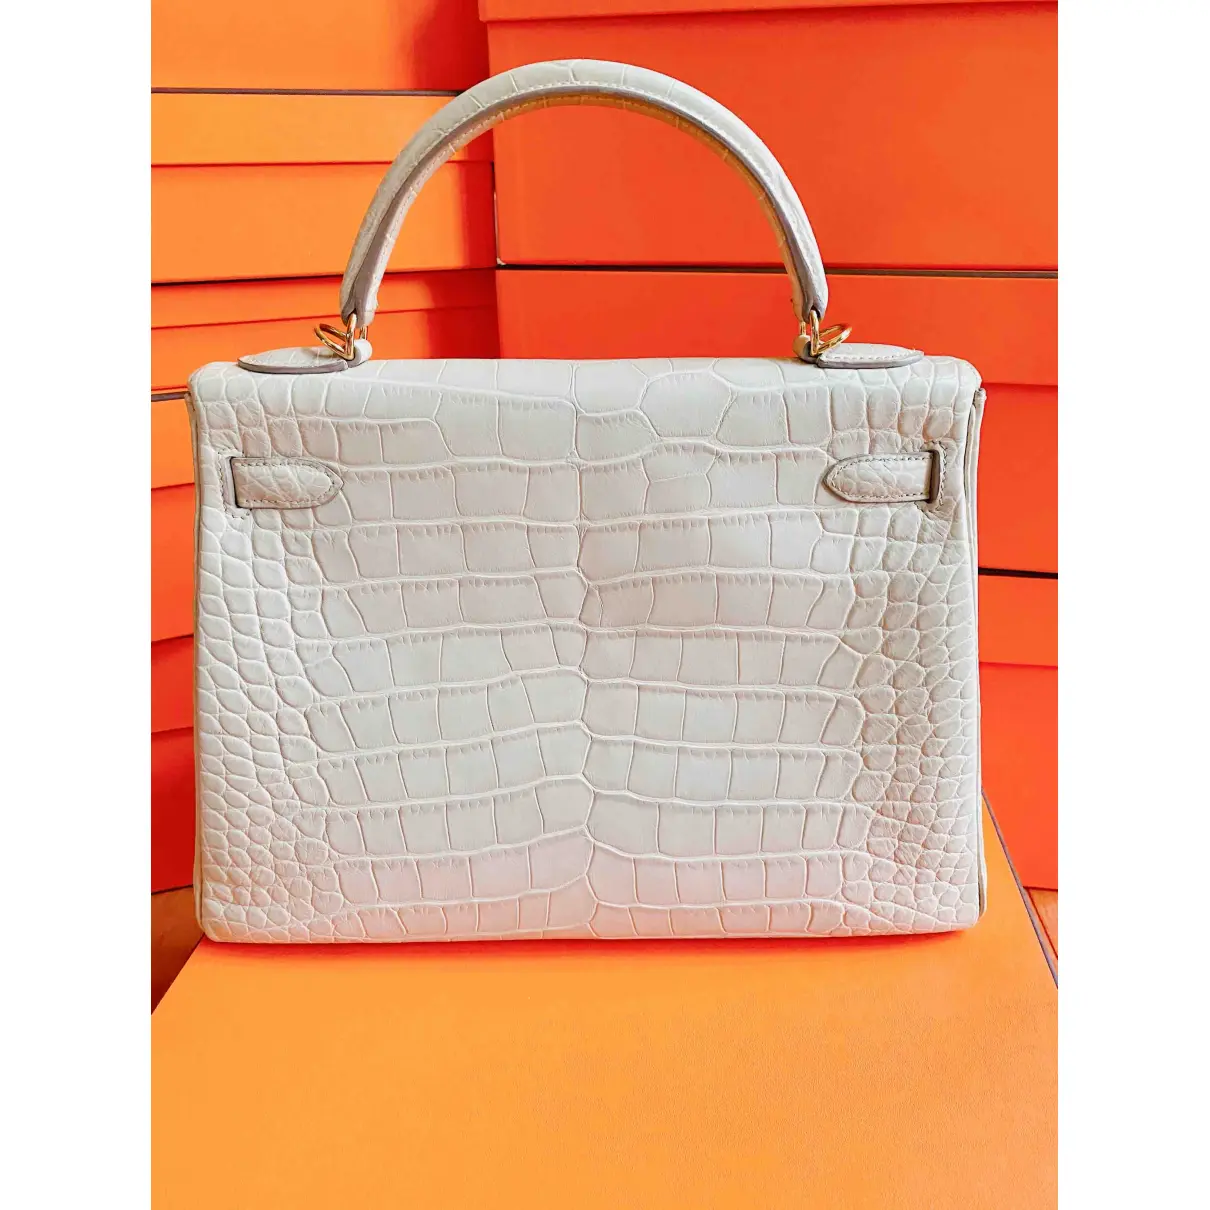 Buy Hermès Kelly 32 alligator handbag online